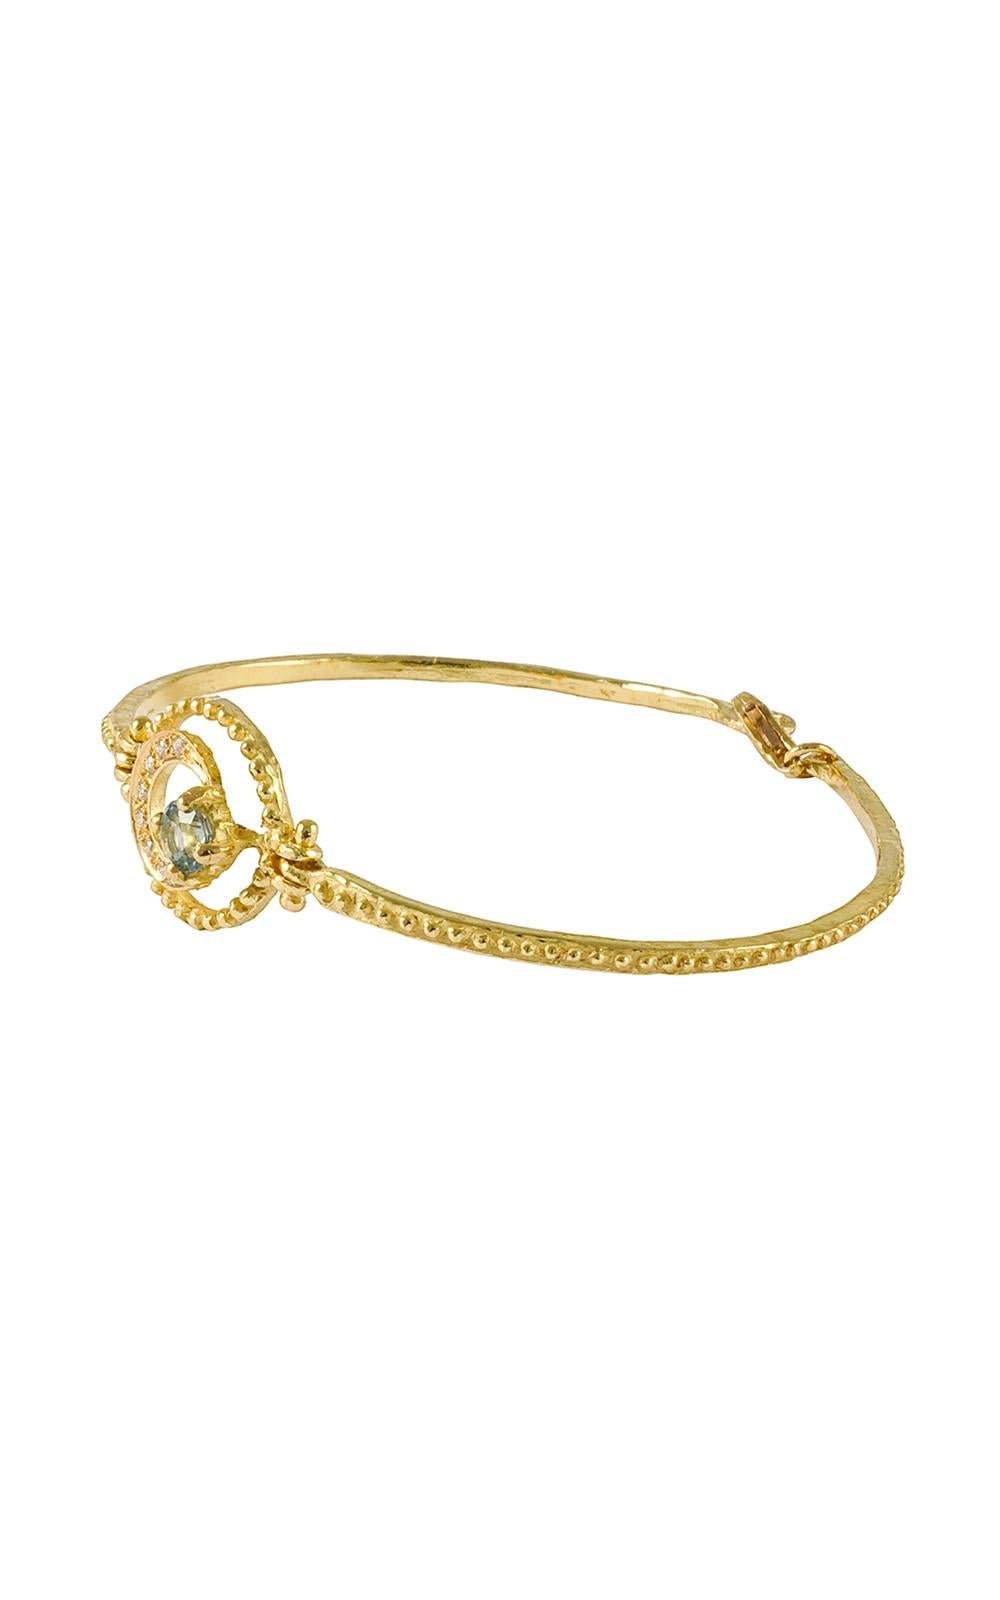 Contemporary Sacchi Aquamarine and Diamonds Gemstone Bracelet 18 Karat Yellow Gold 